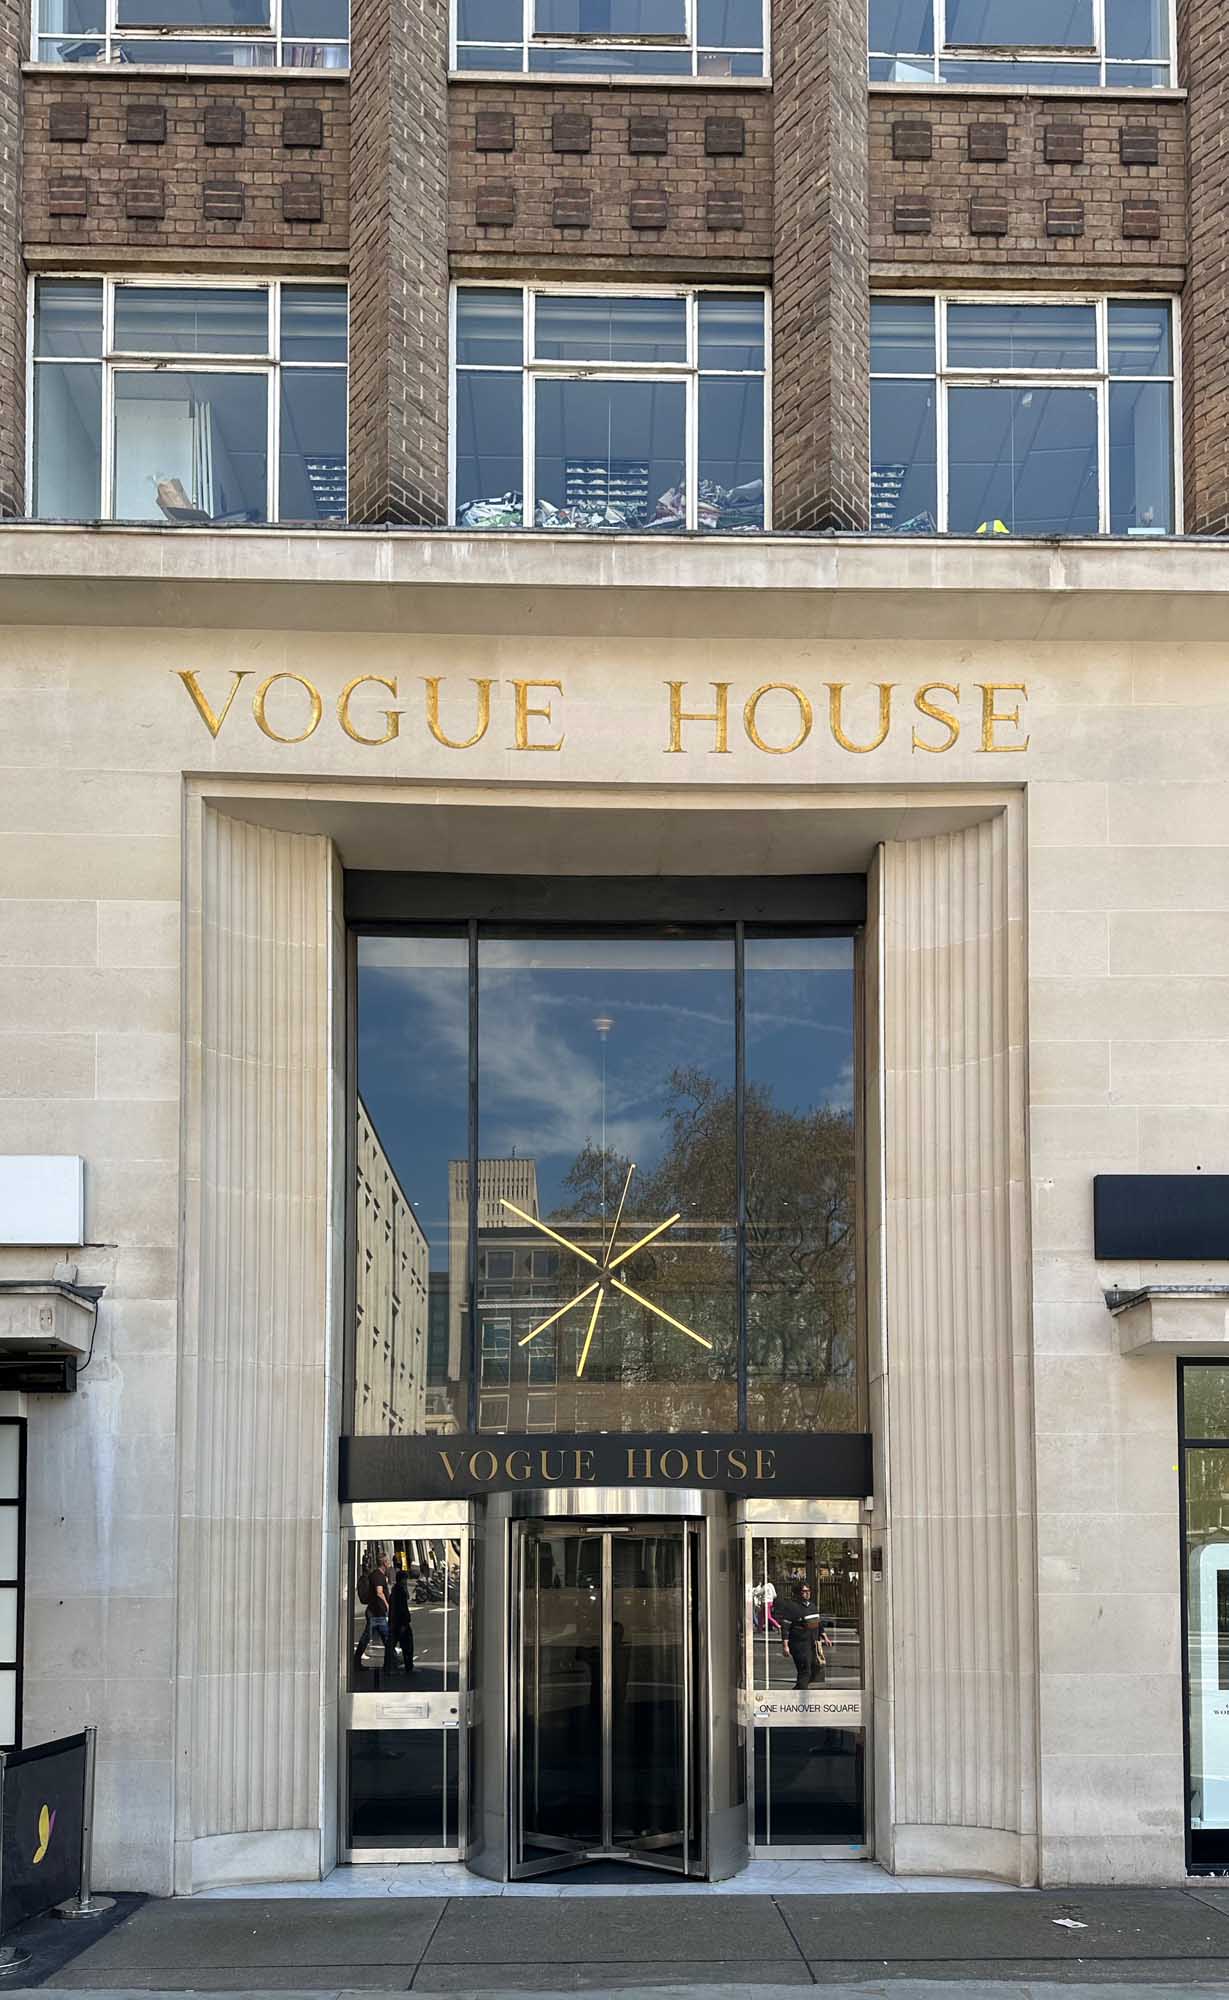 Farewell to Vogue House - End of an era for Condé Nast at No 1 Hanover Square